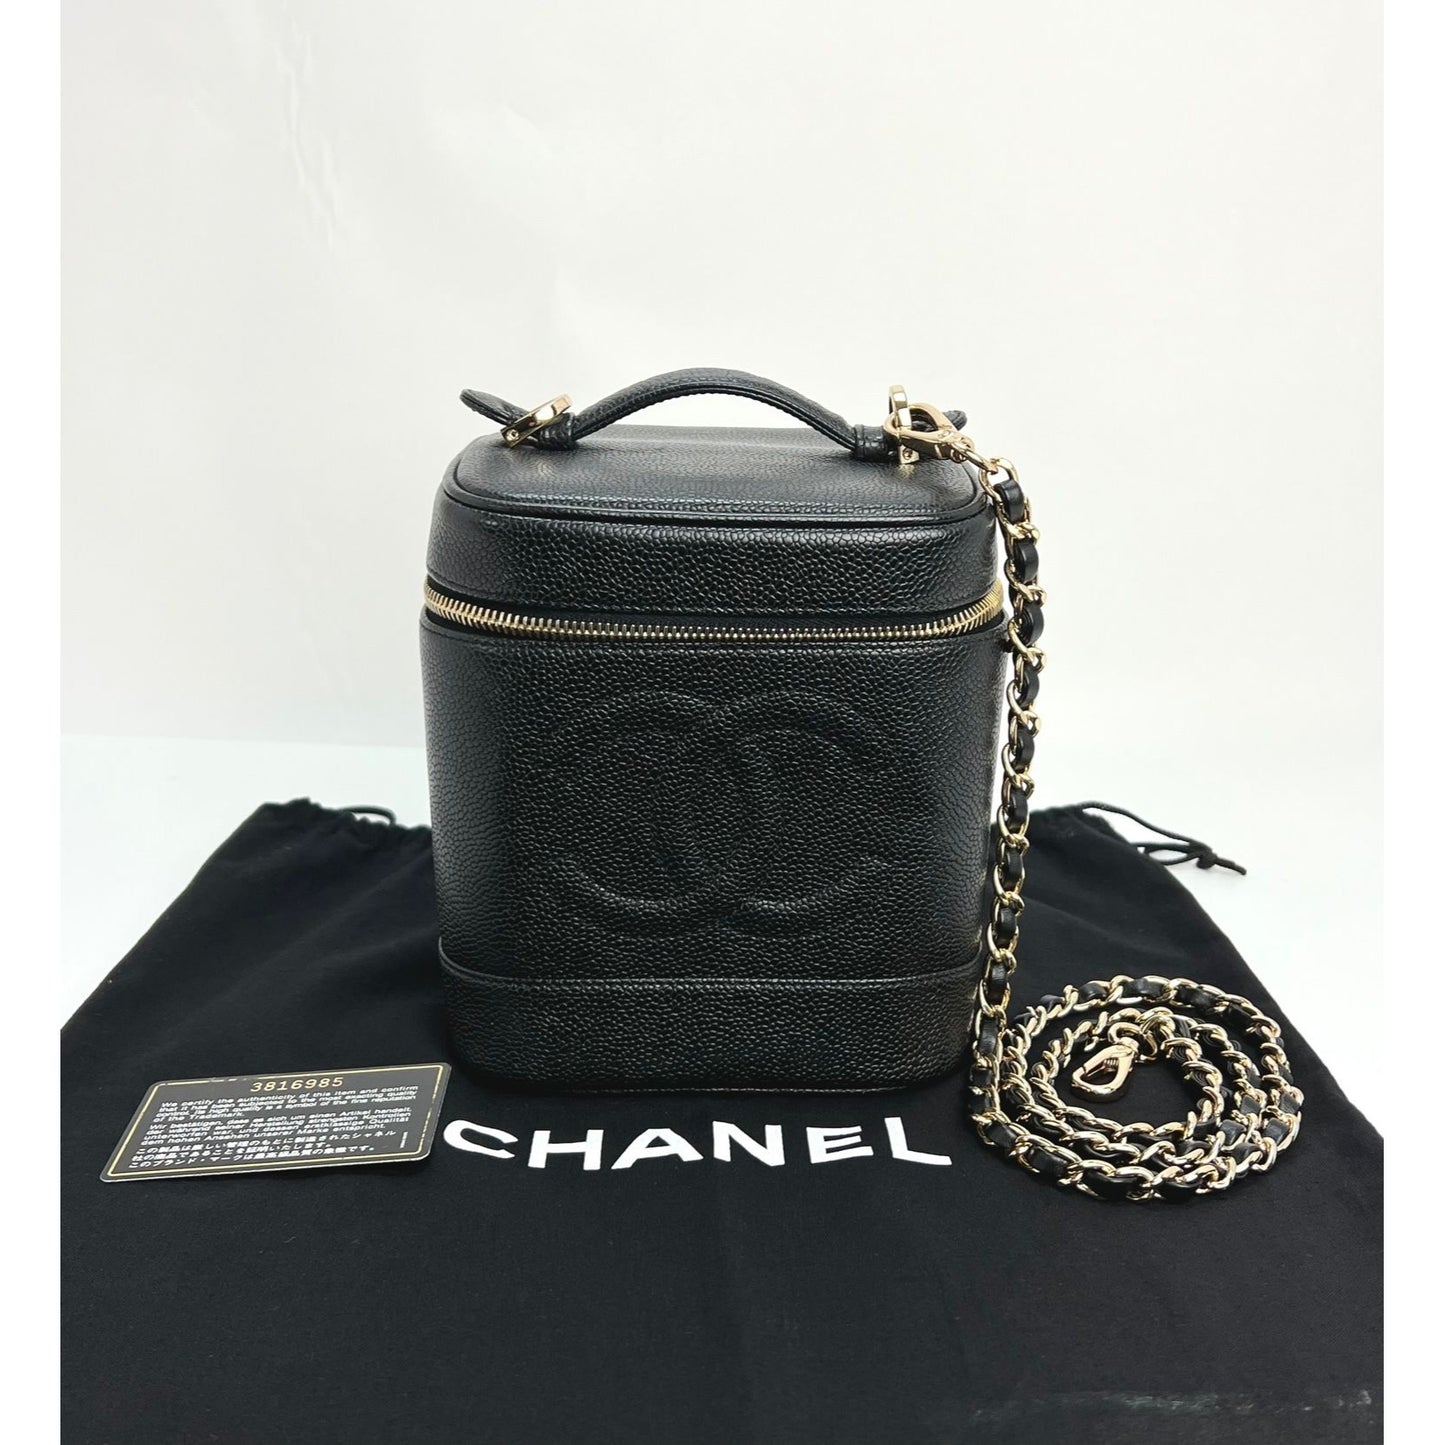 New! Chanel Cosmetic Bag - Gem